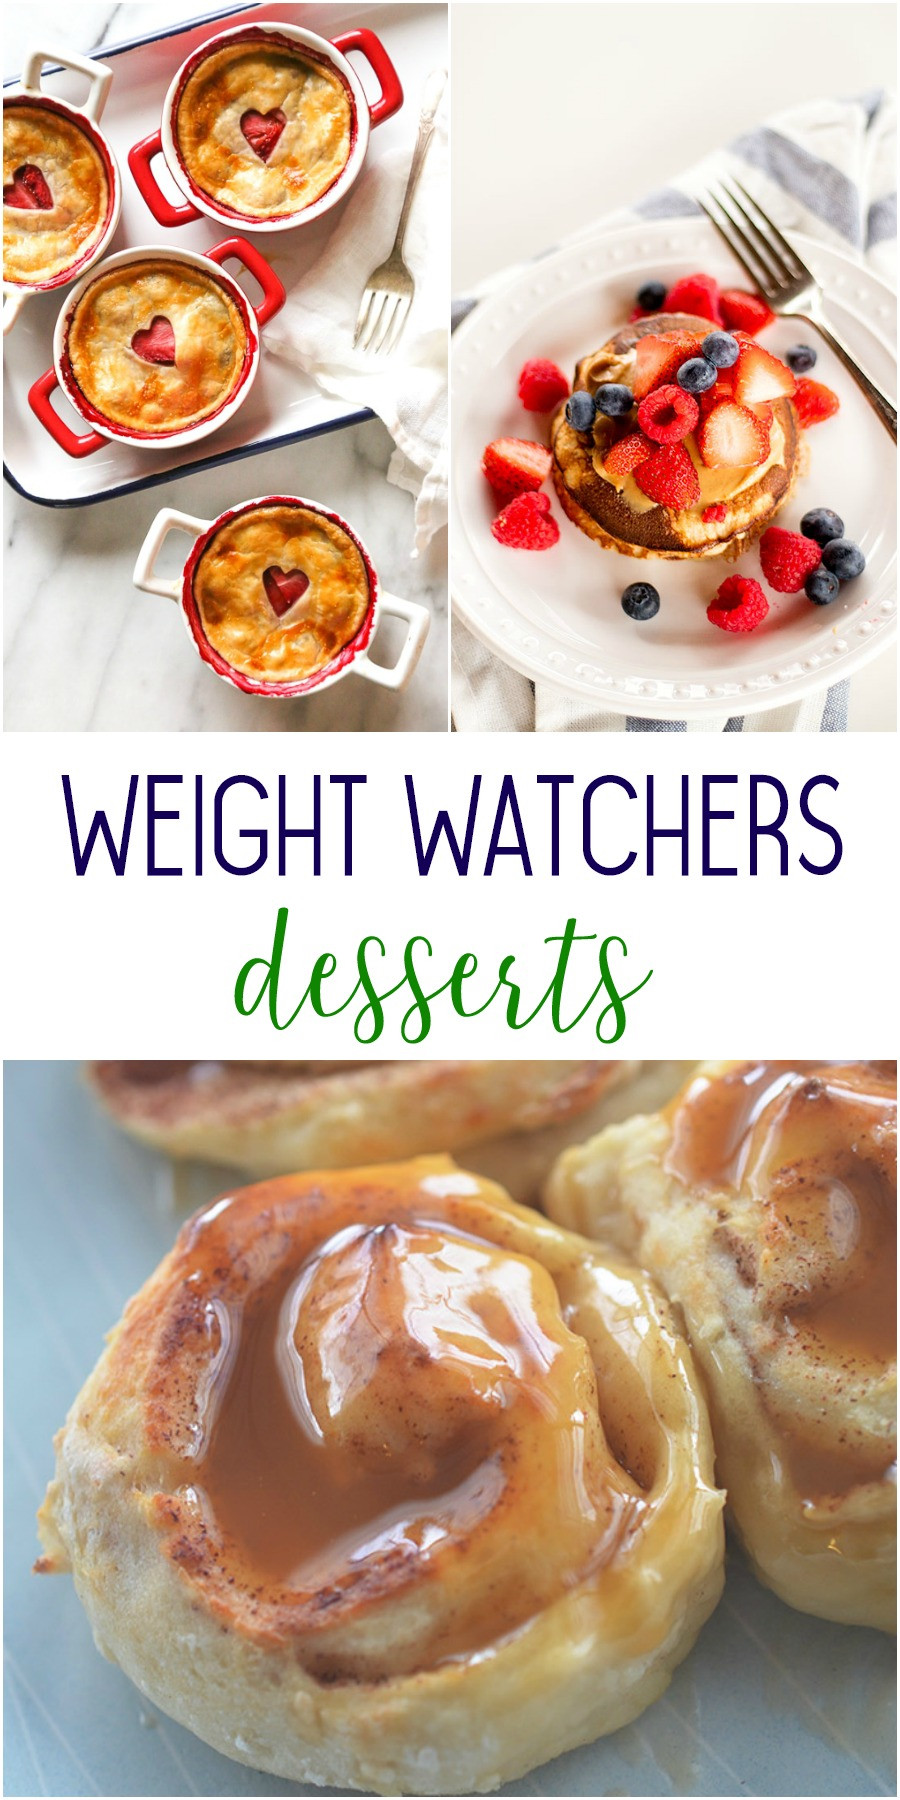 Weight Watchers Desserts Recipes
 Weight Watchers Desserts The Endless Appetite